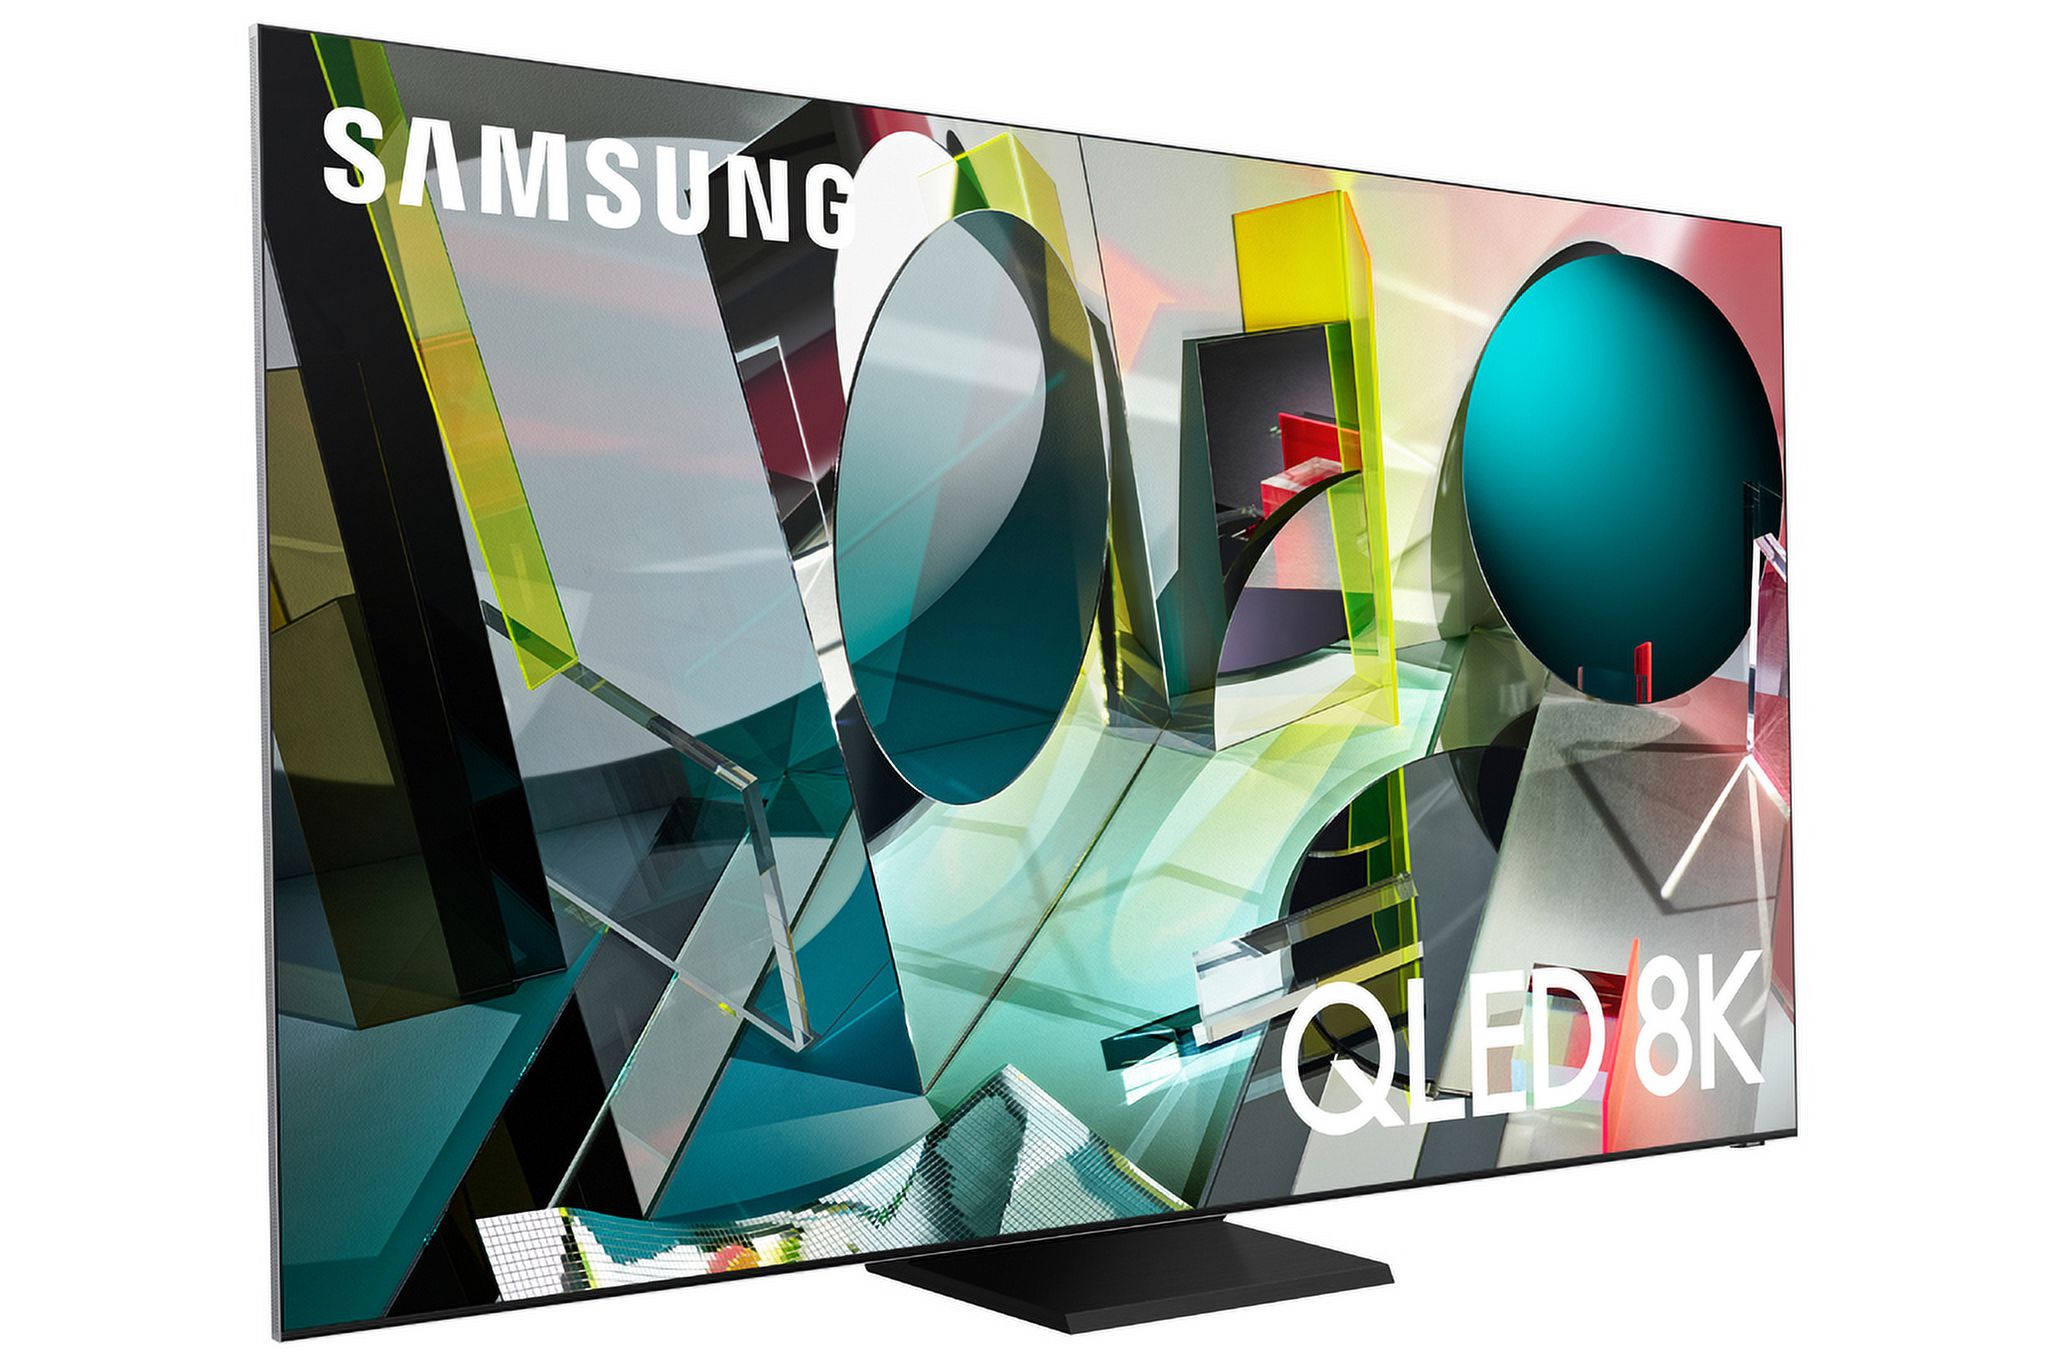 SAMSUNG 75" Class 8K Ultra HD (4320P) HDR Smart QLED TV QN75Q900T 2020 - image 4 of 16